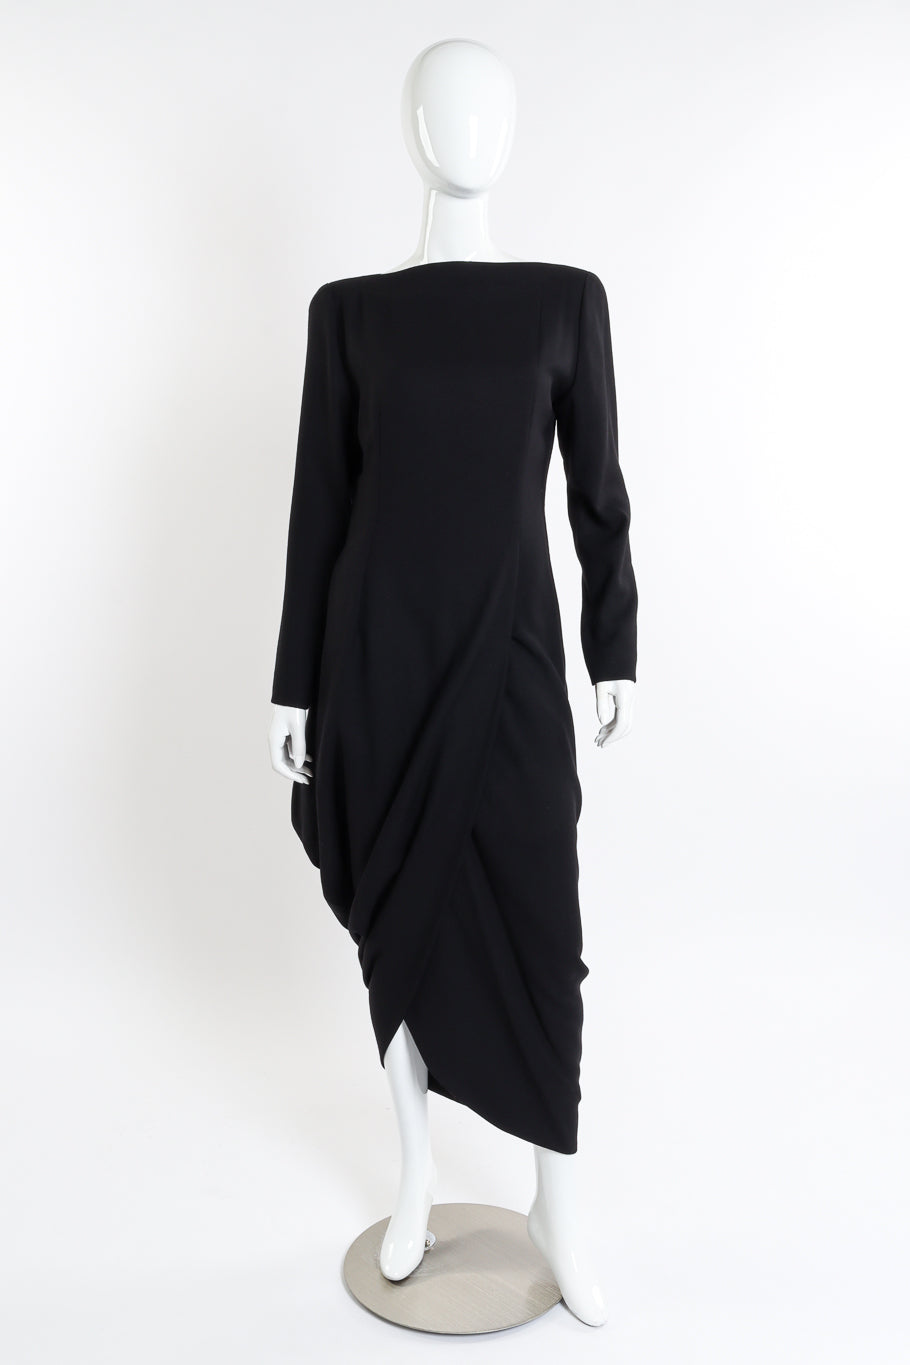 Vintage Givenchy Asymmetrical Hem Dress front on mannequin @recessla